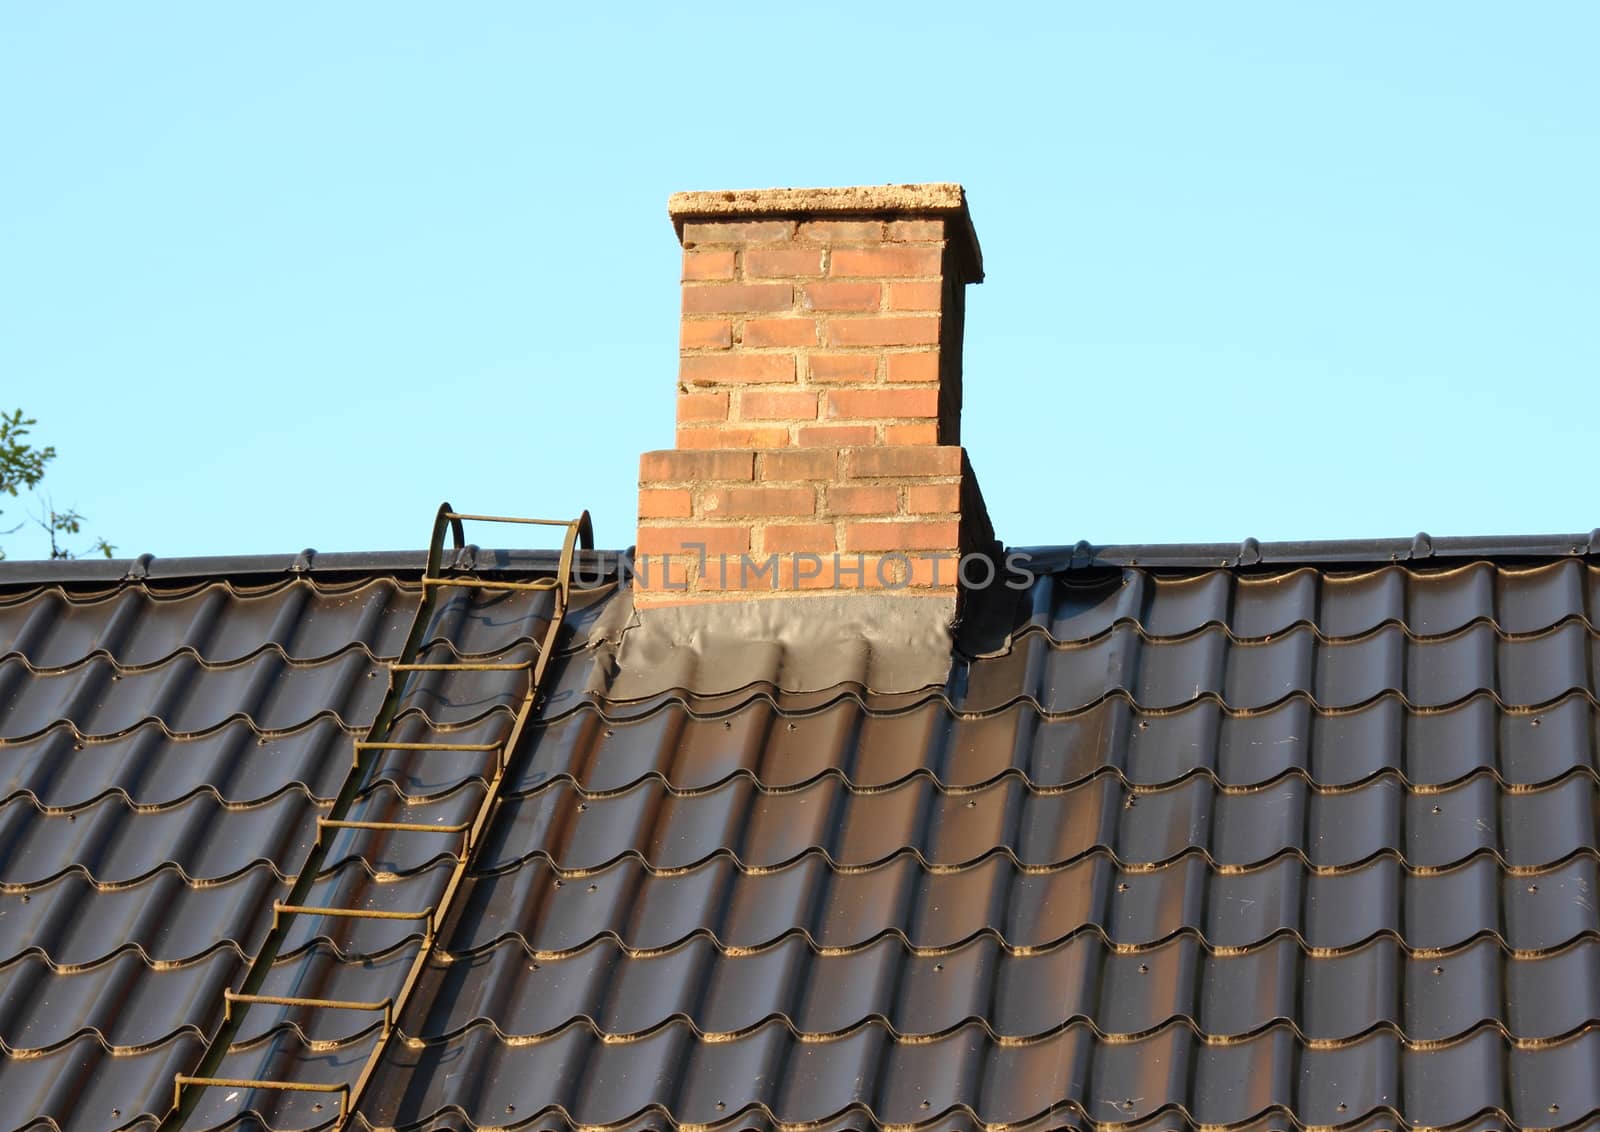 Brick chimney on black roof with metal ladder by HoleInTheBox